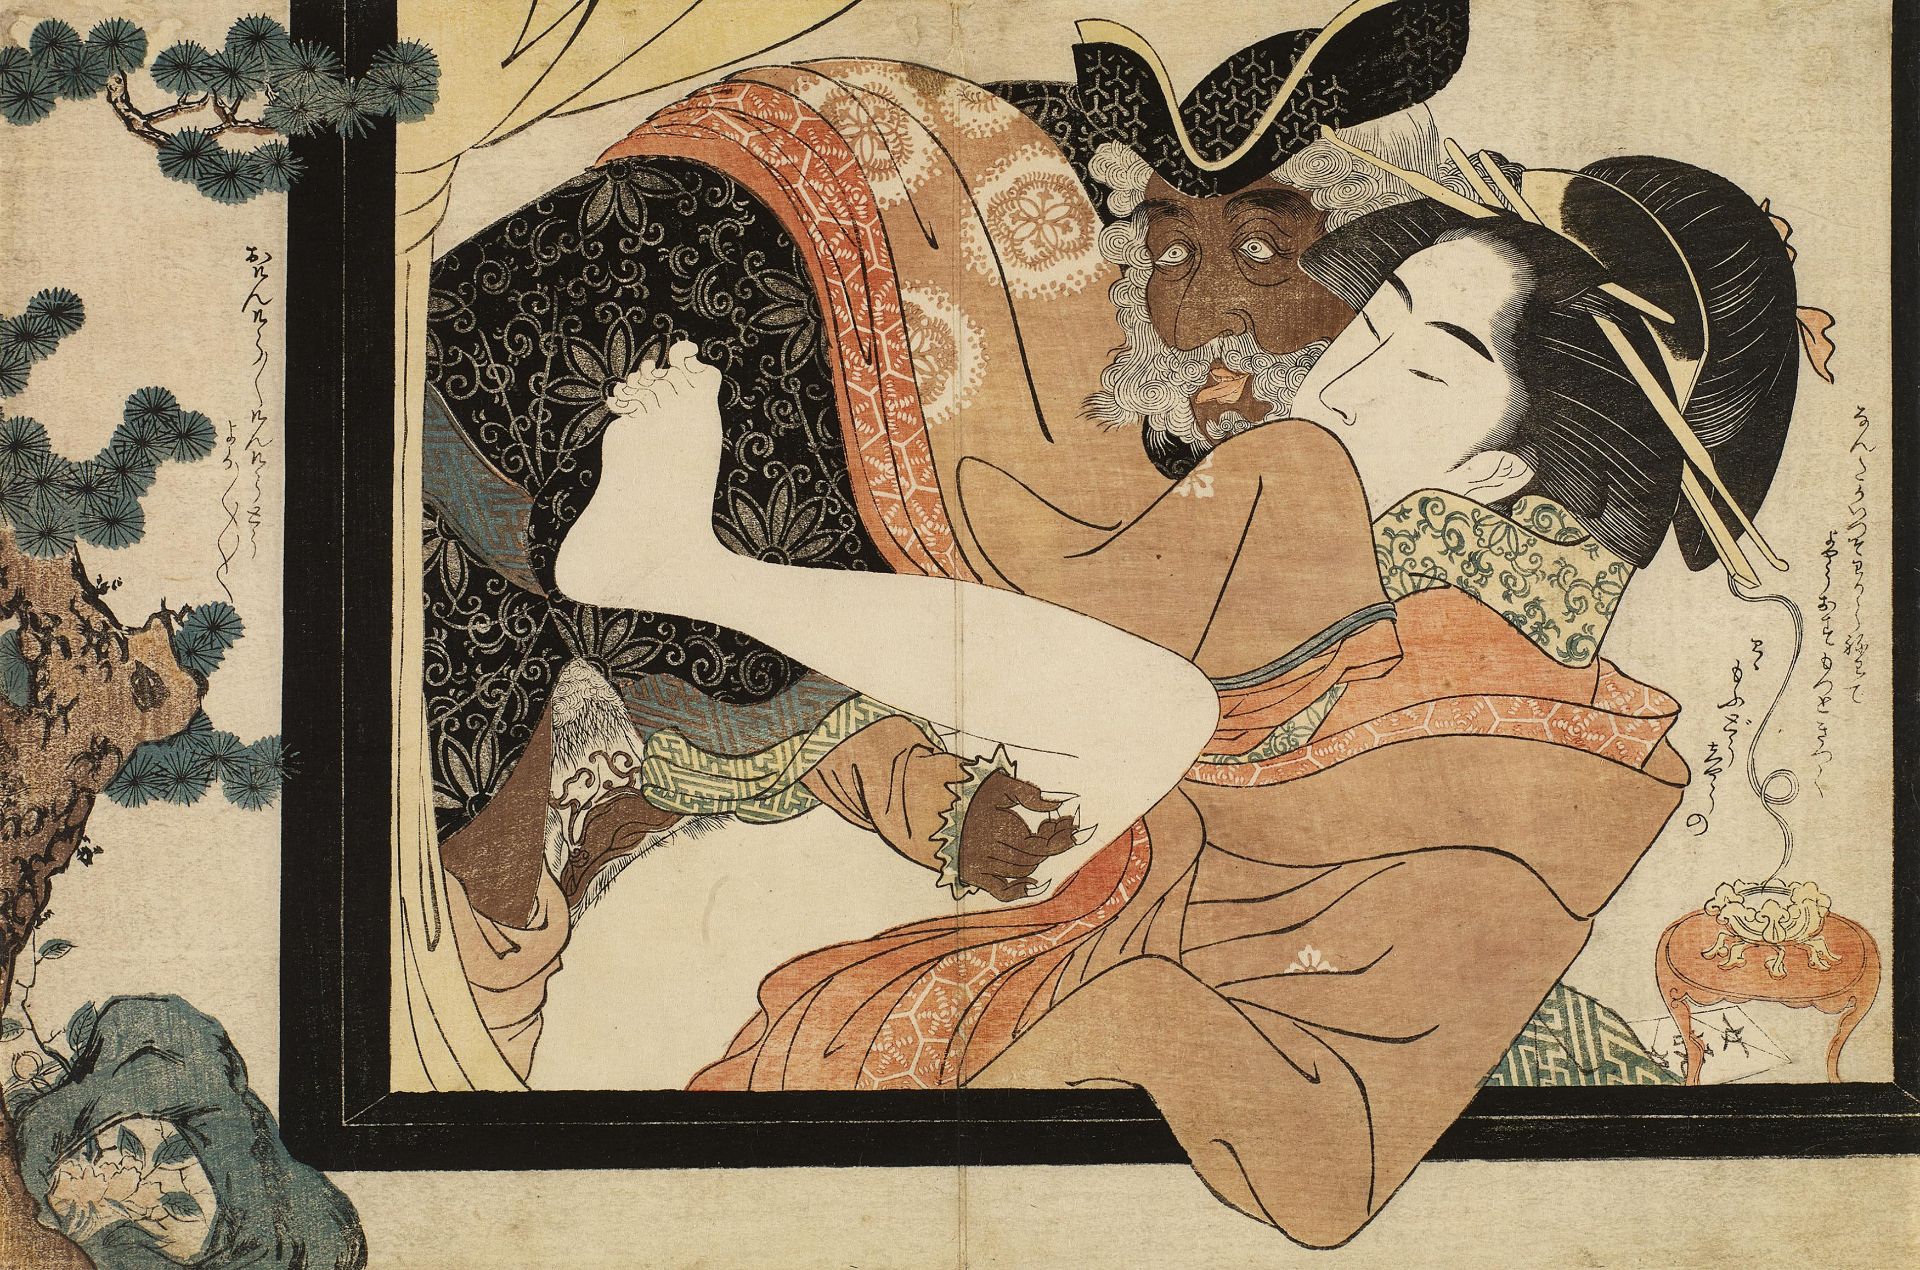 13 Blätter der Shunga-Serie "Fumi no kiyogaki" - Image 7 of 27